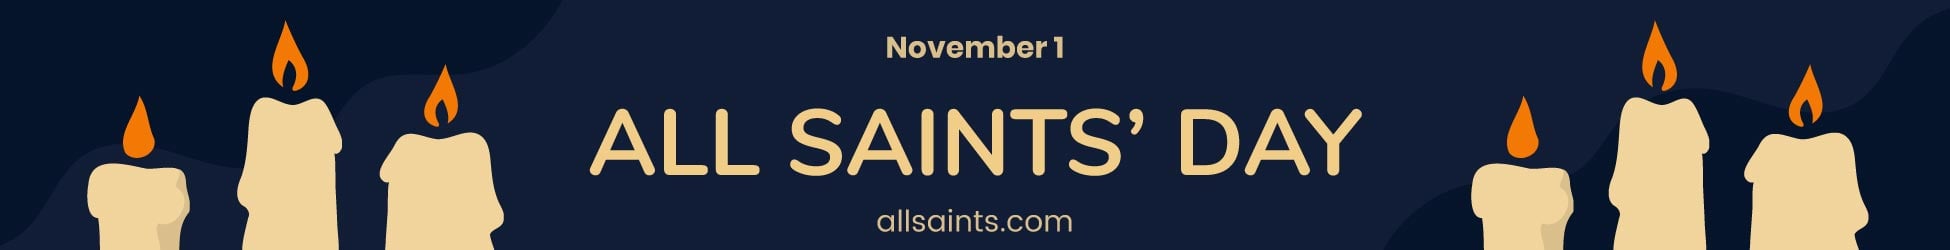 All Saints' Day Website Banner